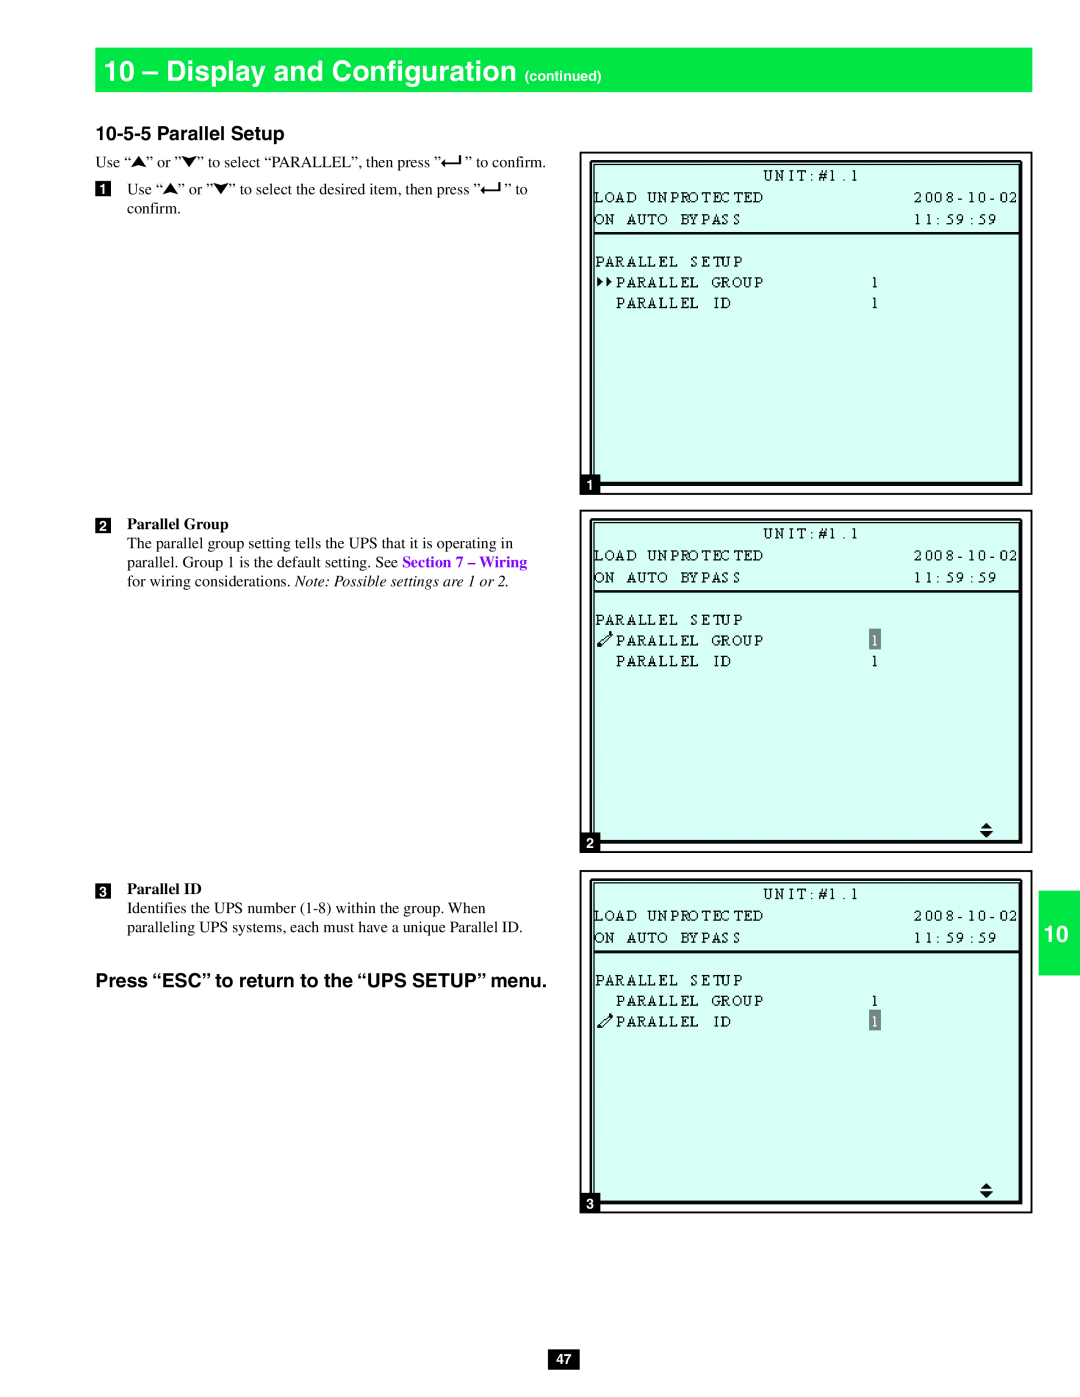 Tripp Lite SU40KX Parallel Setup, Display and Configuration continued, Press “ESC” to return to the “UPS SETUP” menu 